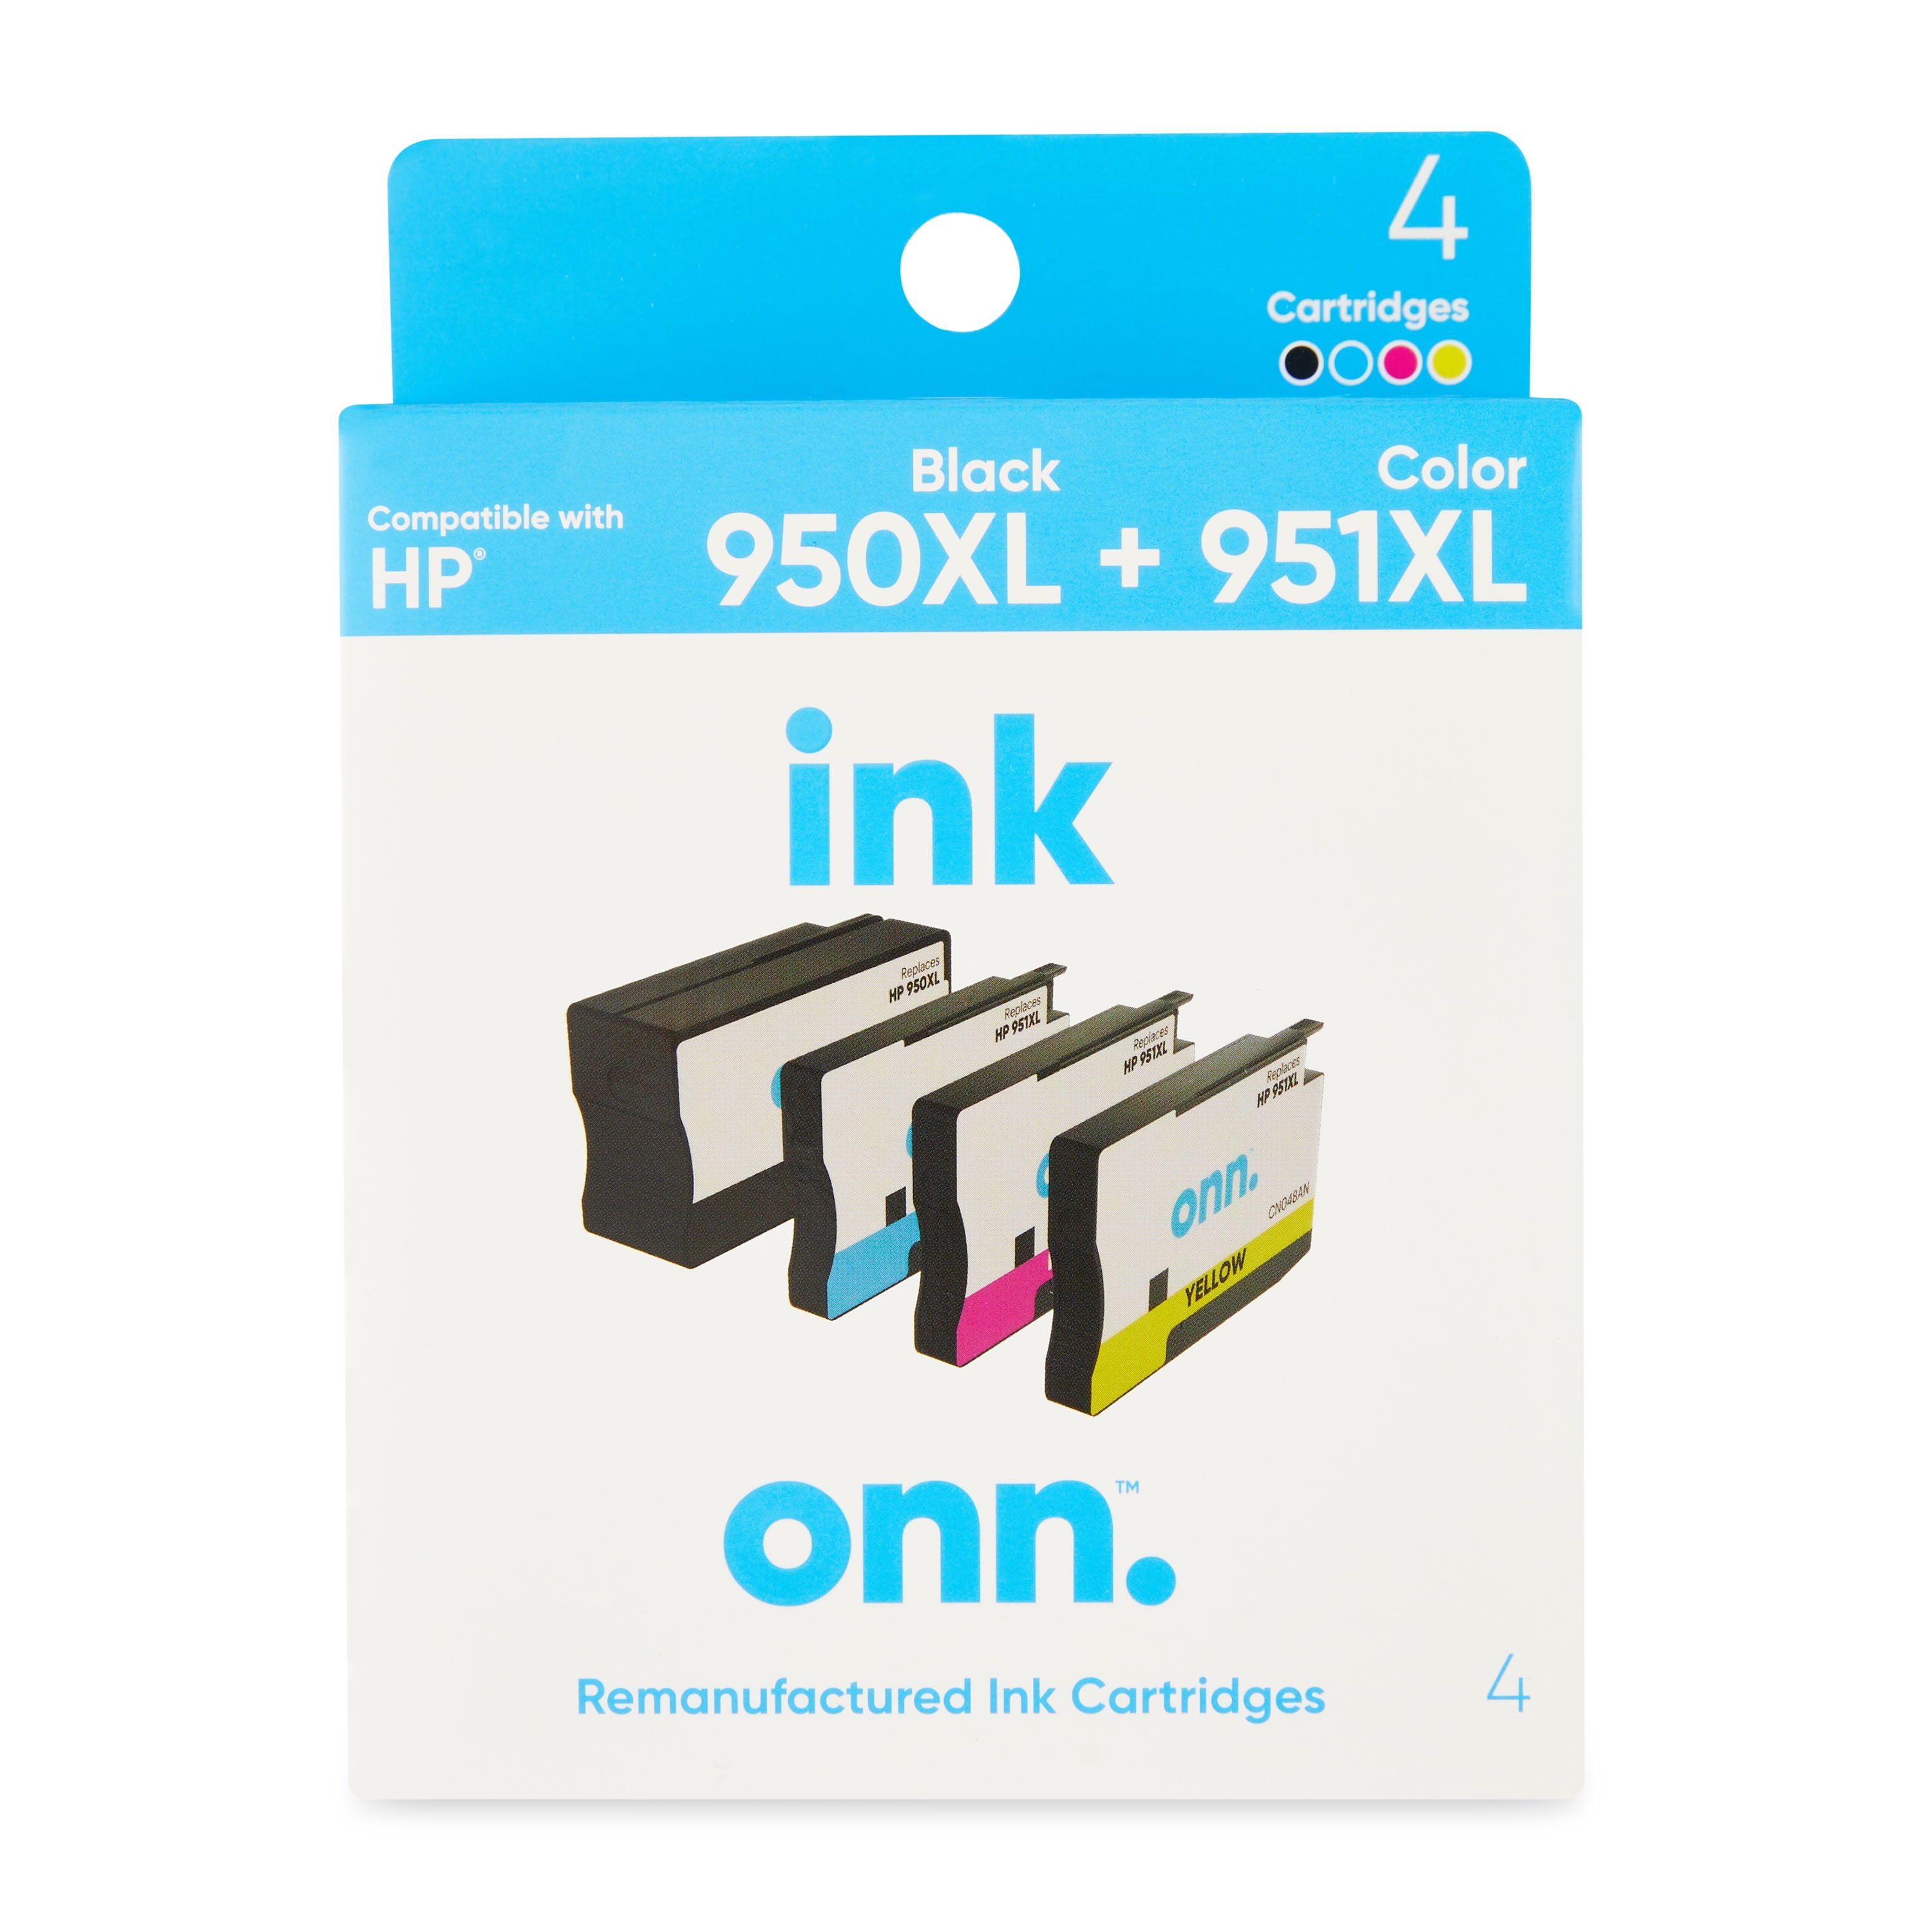 onn. Remanufactured Ink Cartridges, HP 950XL Black + 951XL Color, 4 Cartridges